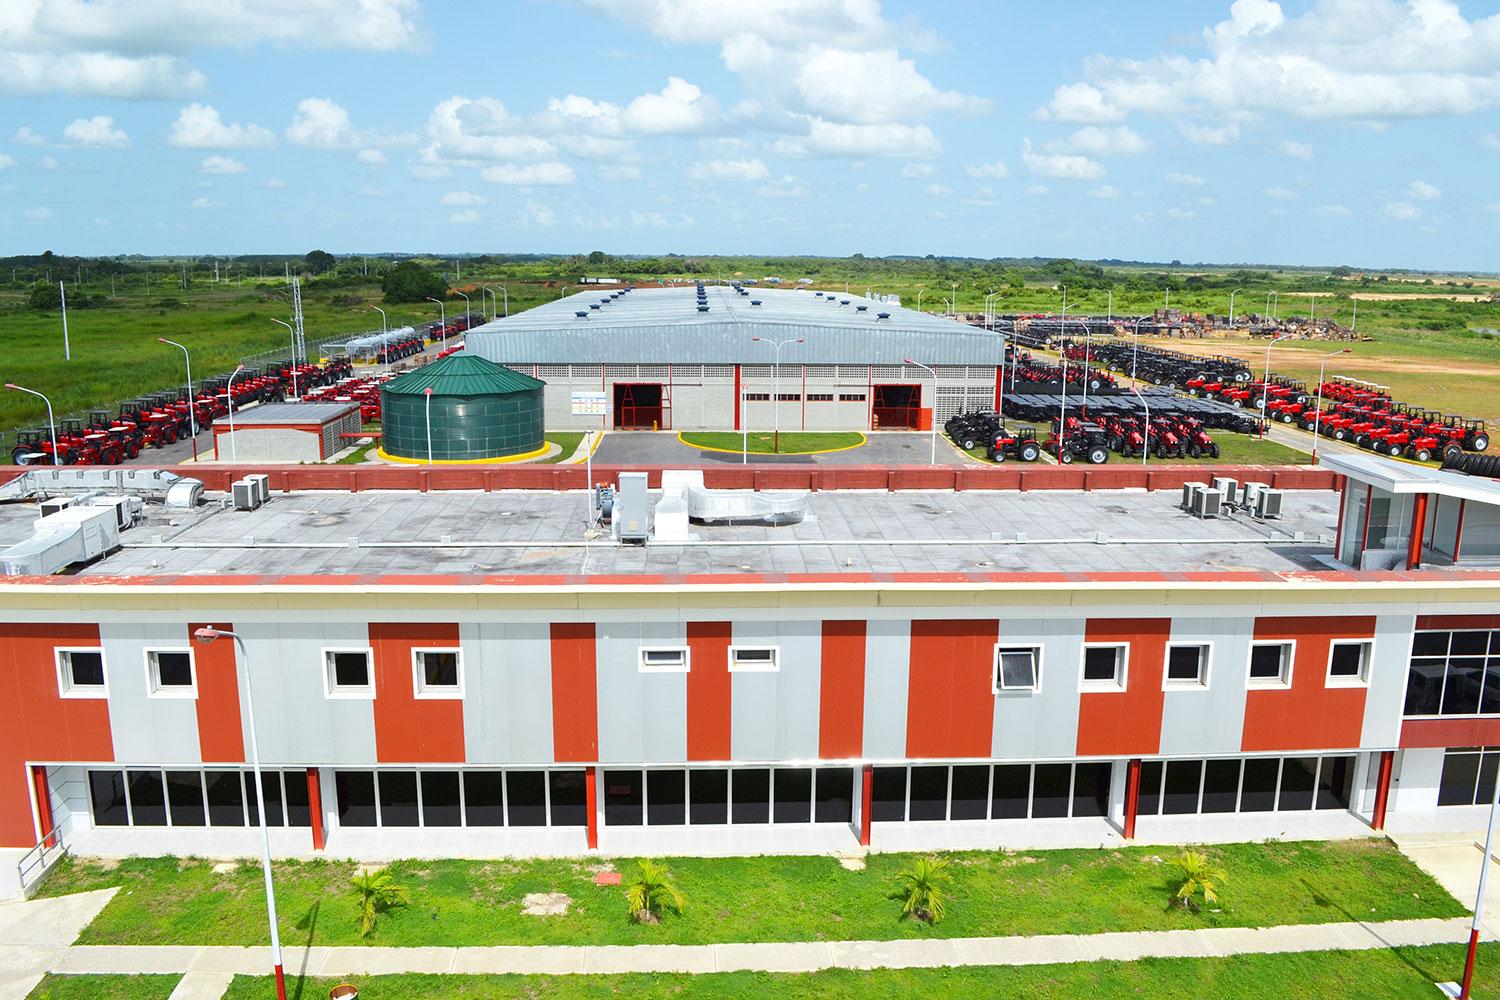 Belarus tractor assembly plant in Venezuela